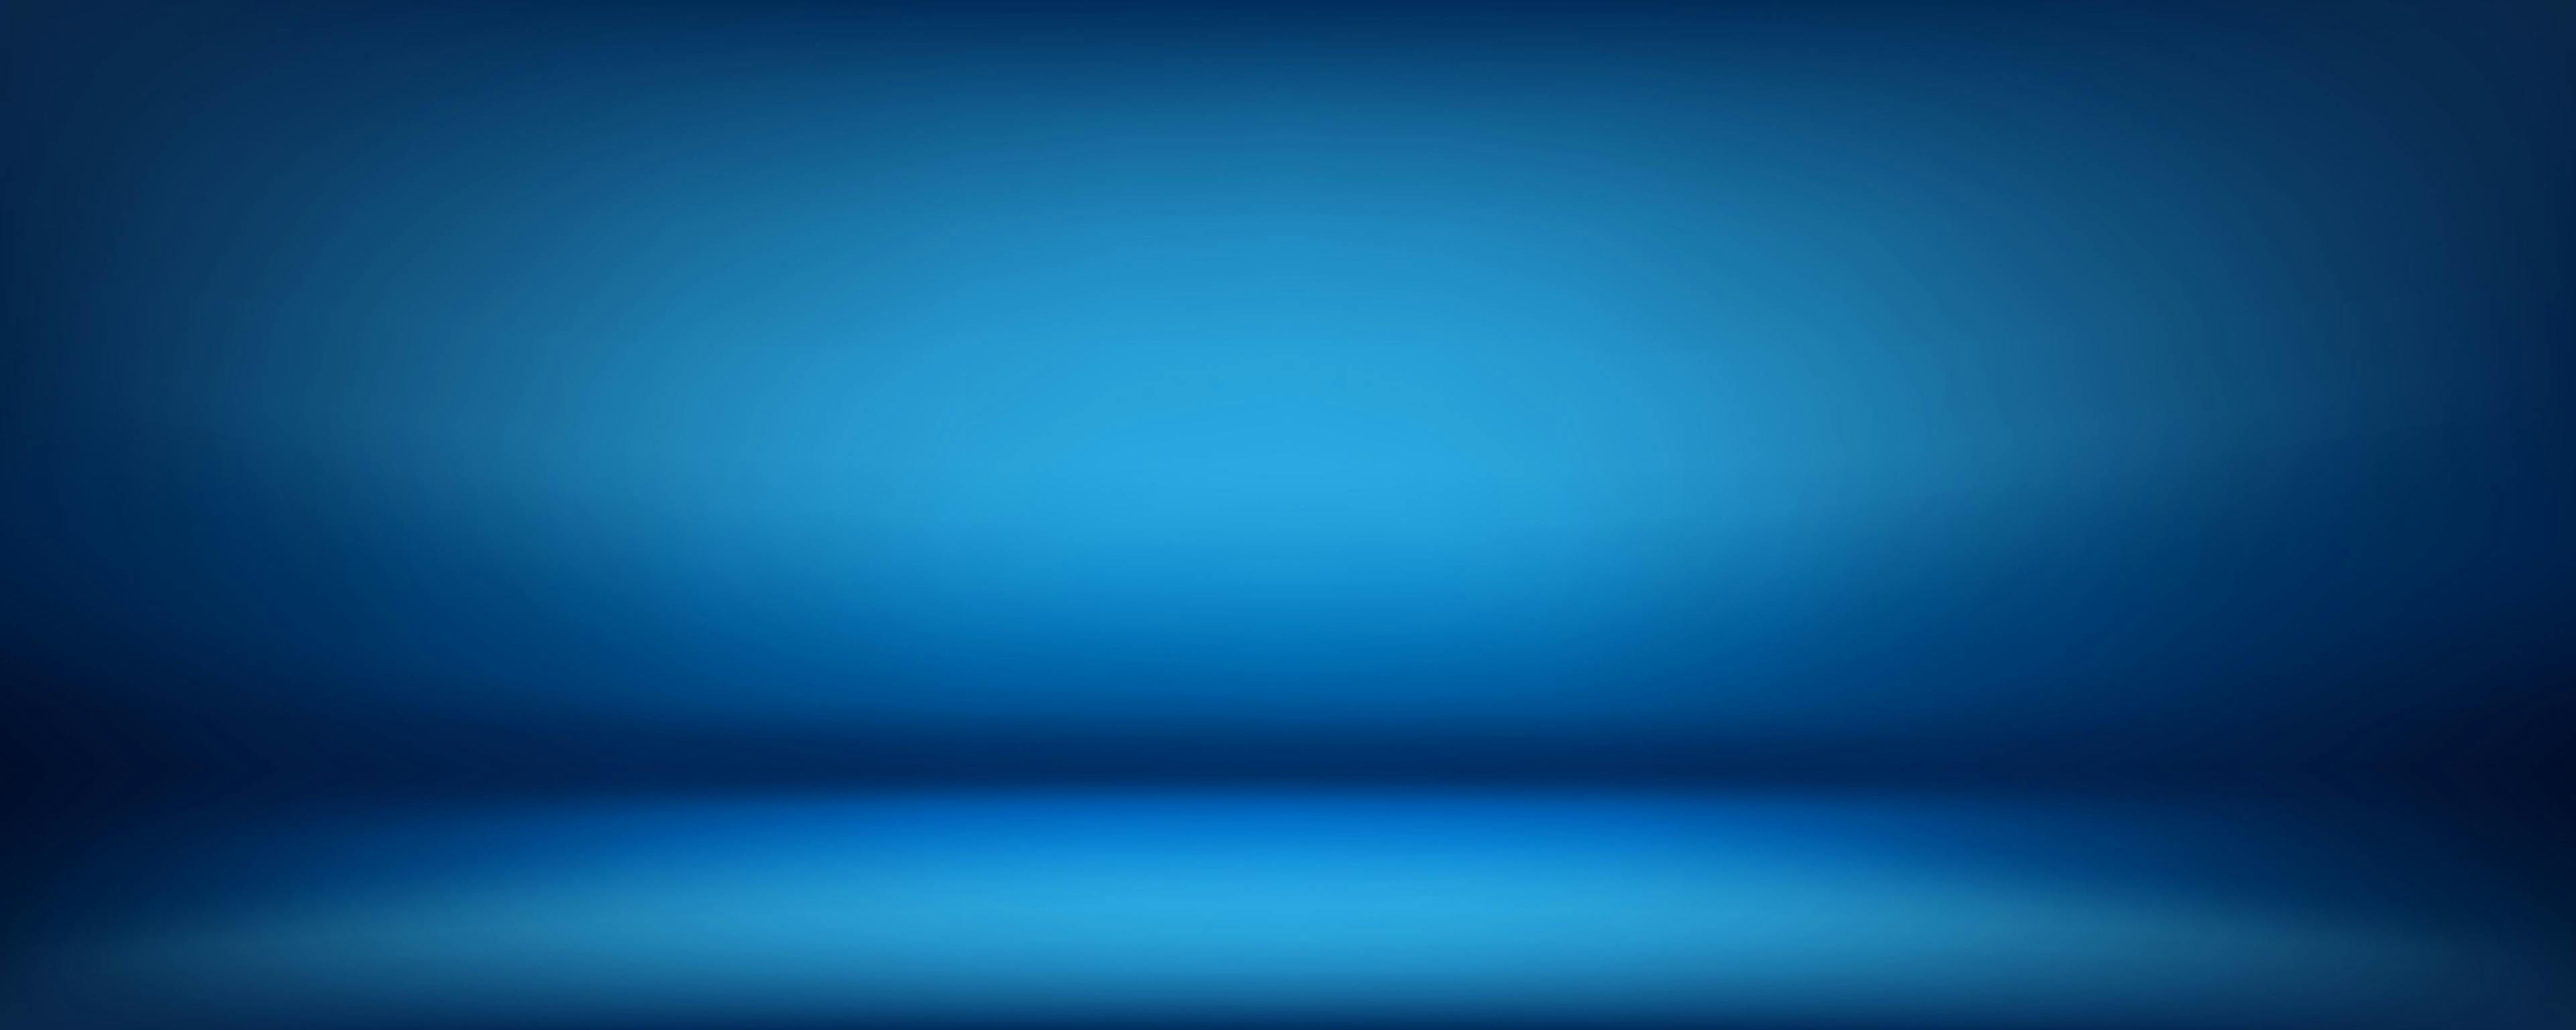 blue background | Image Credit: © khwanchai - stock.adobe.com.